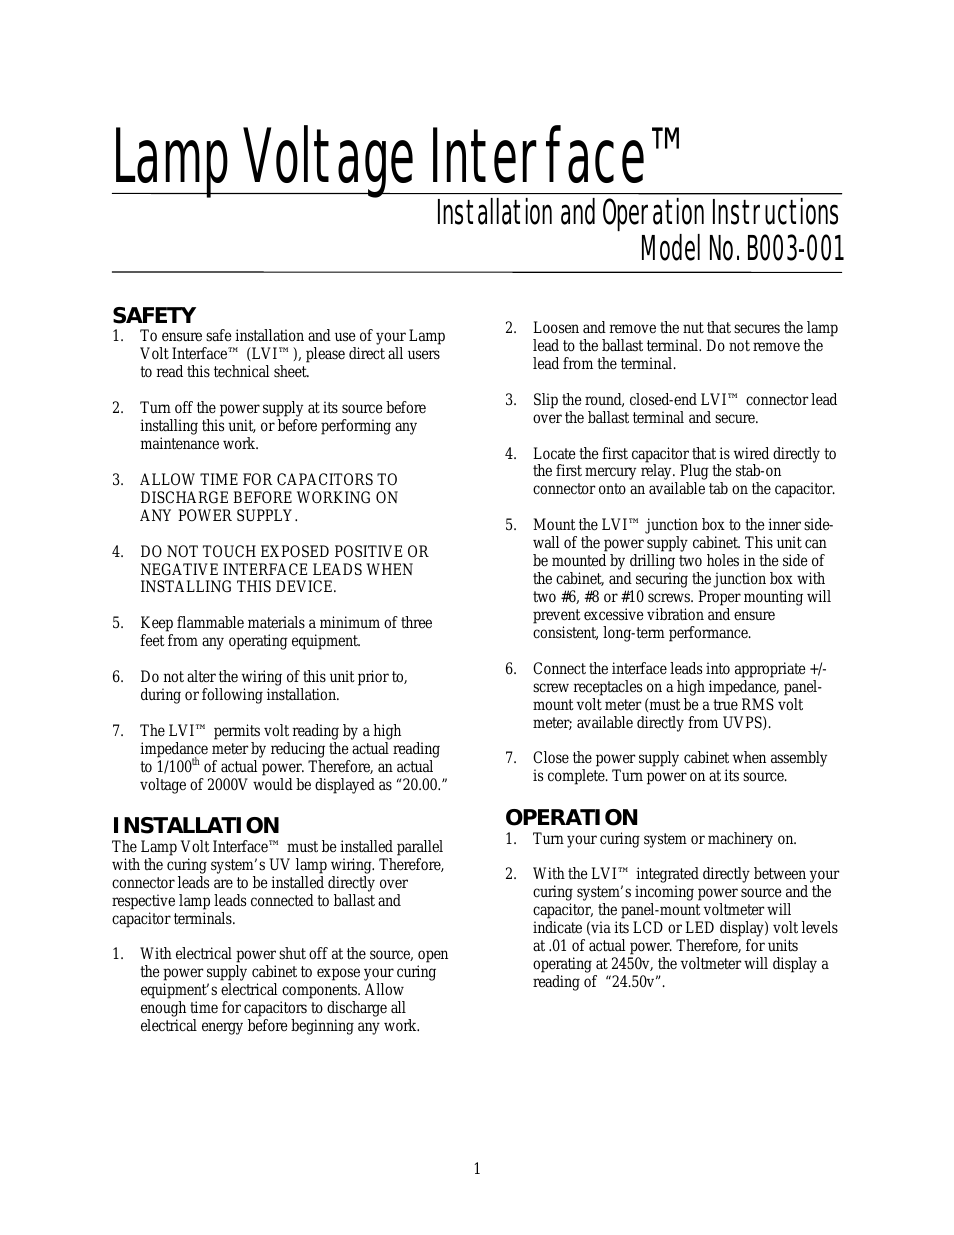 Lamp Voltage Interface B003-001